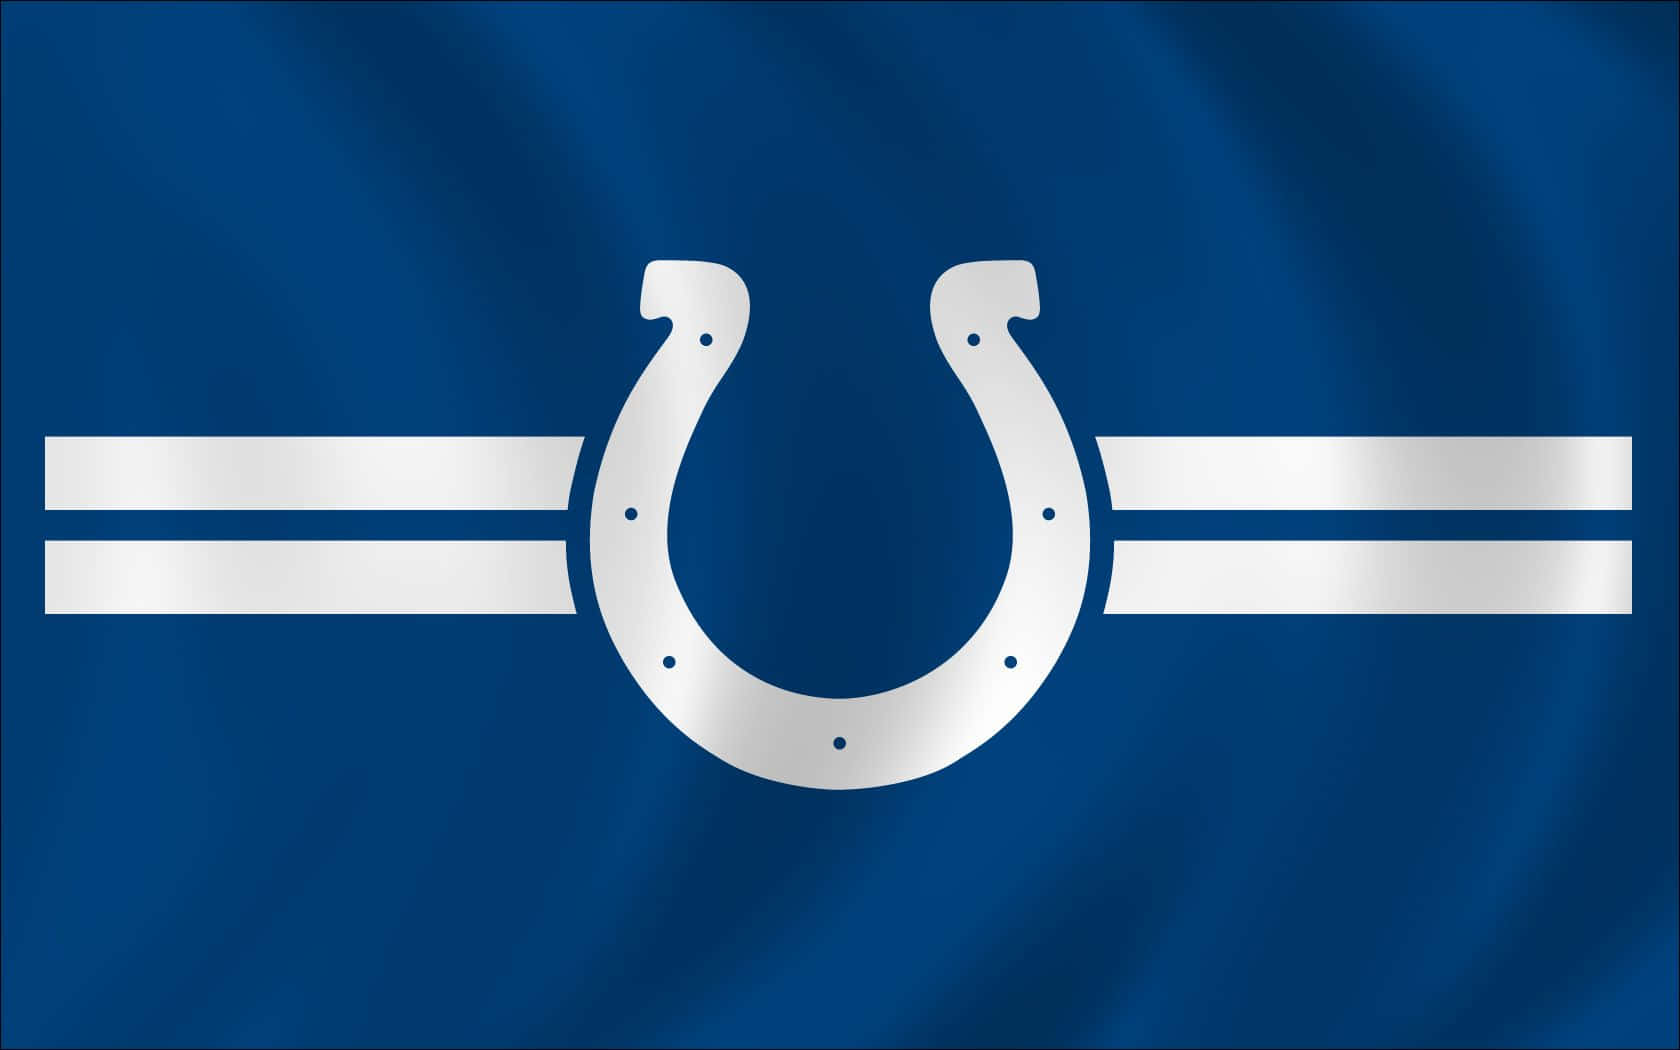 American Football Team Colts Flag Wallpaper